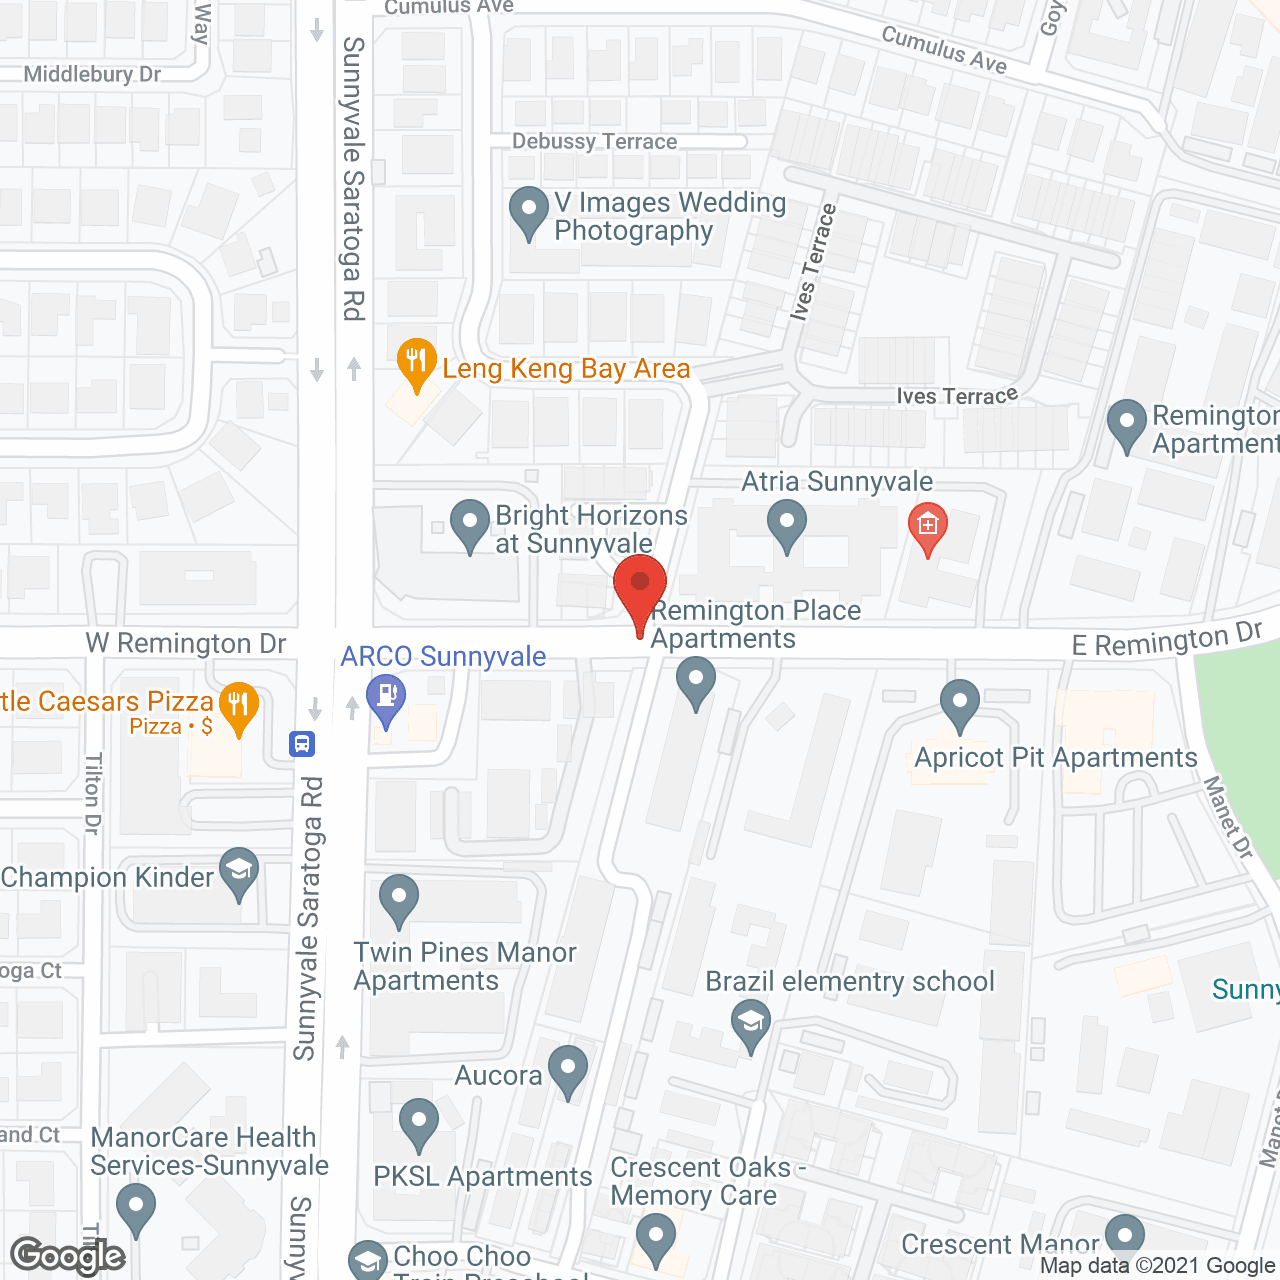 Atria Sunnyvale in google map